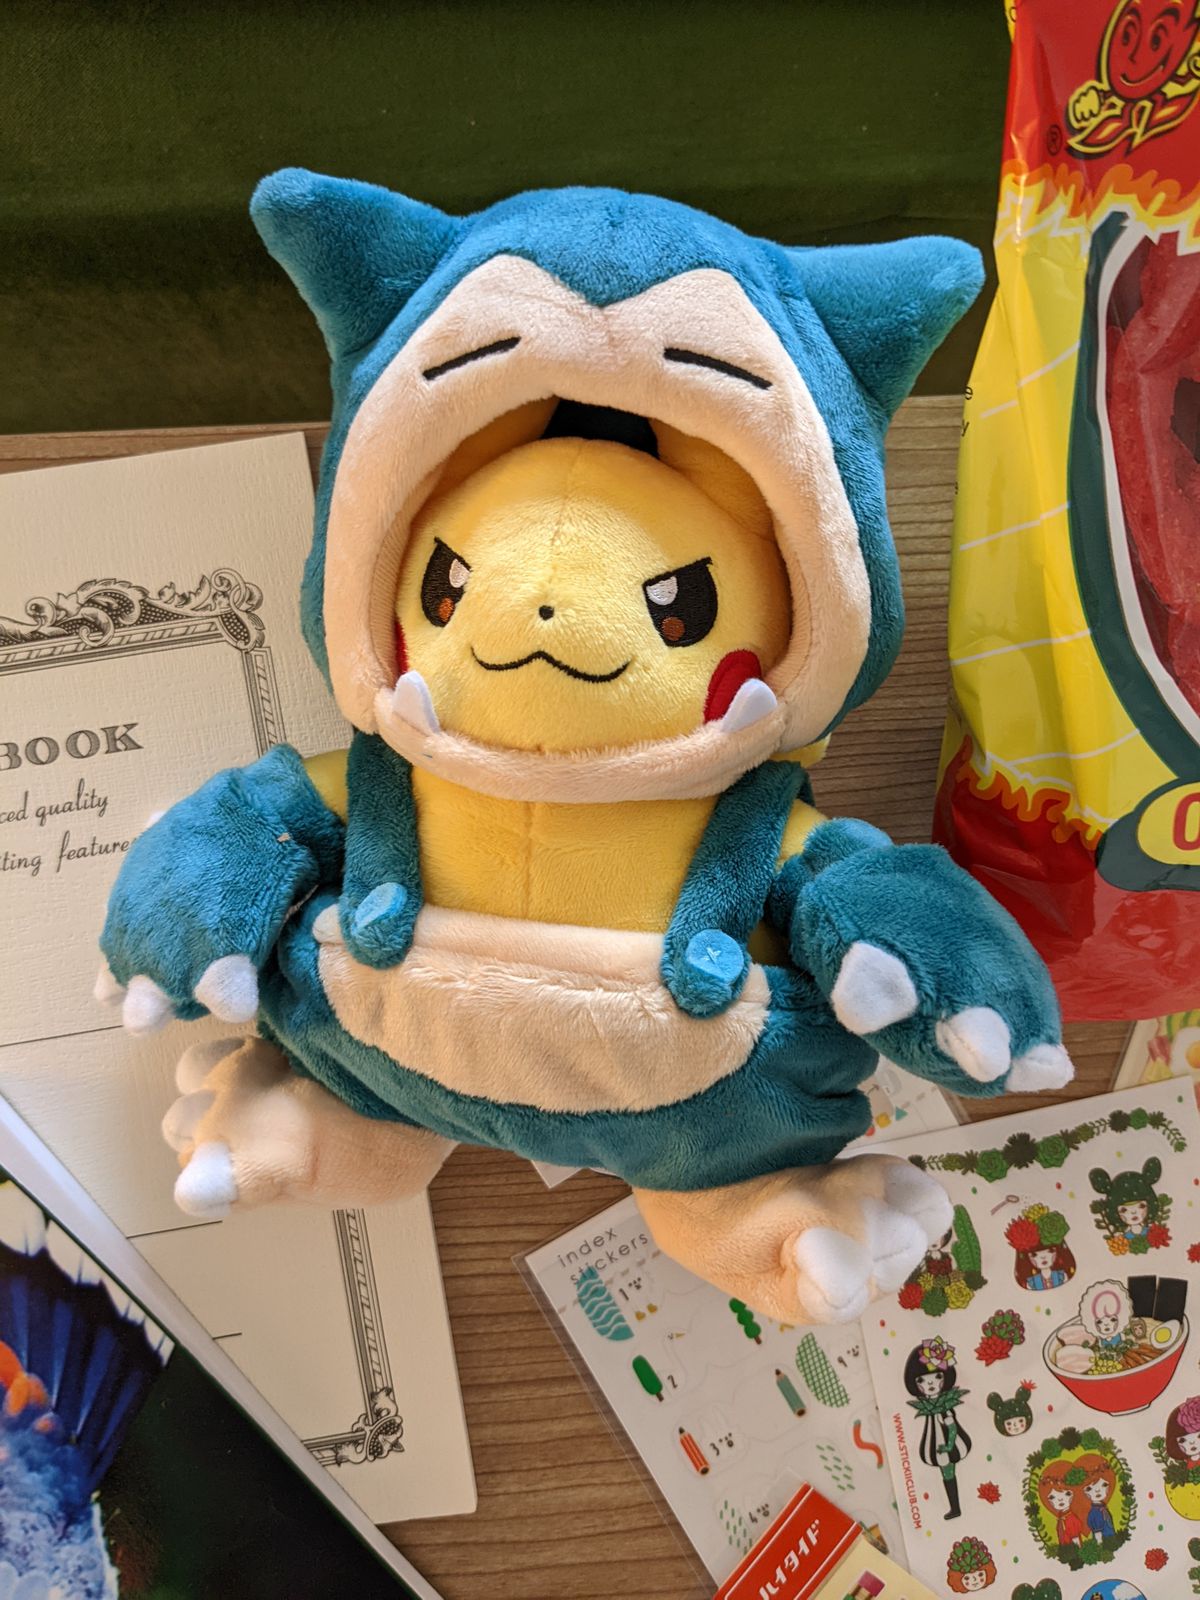 A photo of a plushie Pikachu wearing a Snorlax costume